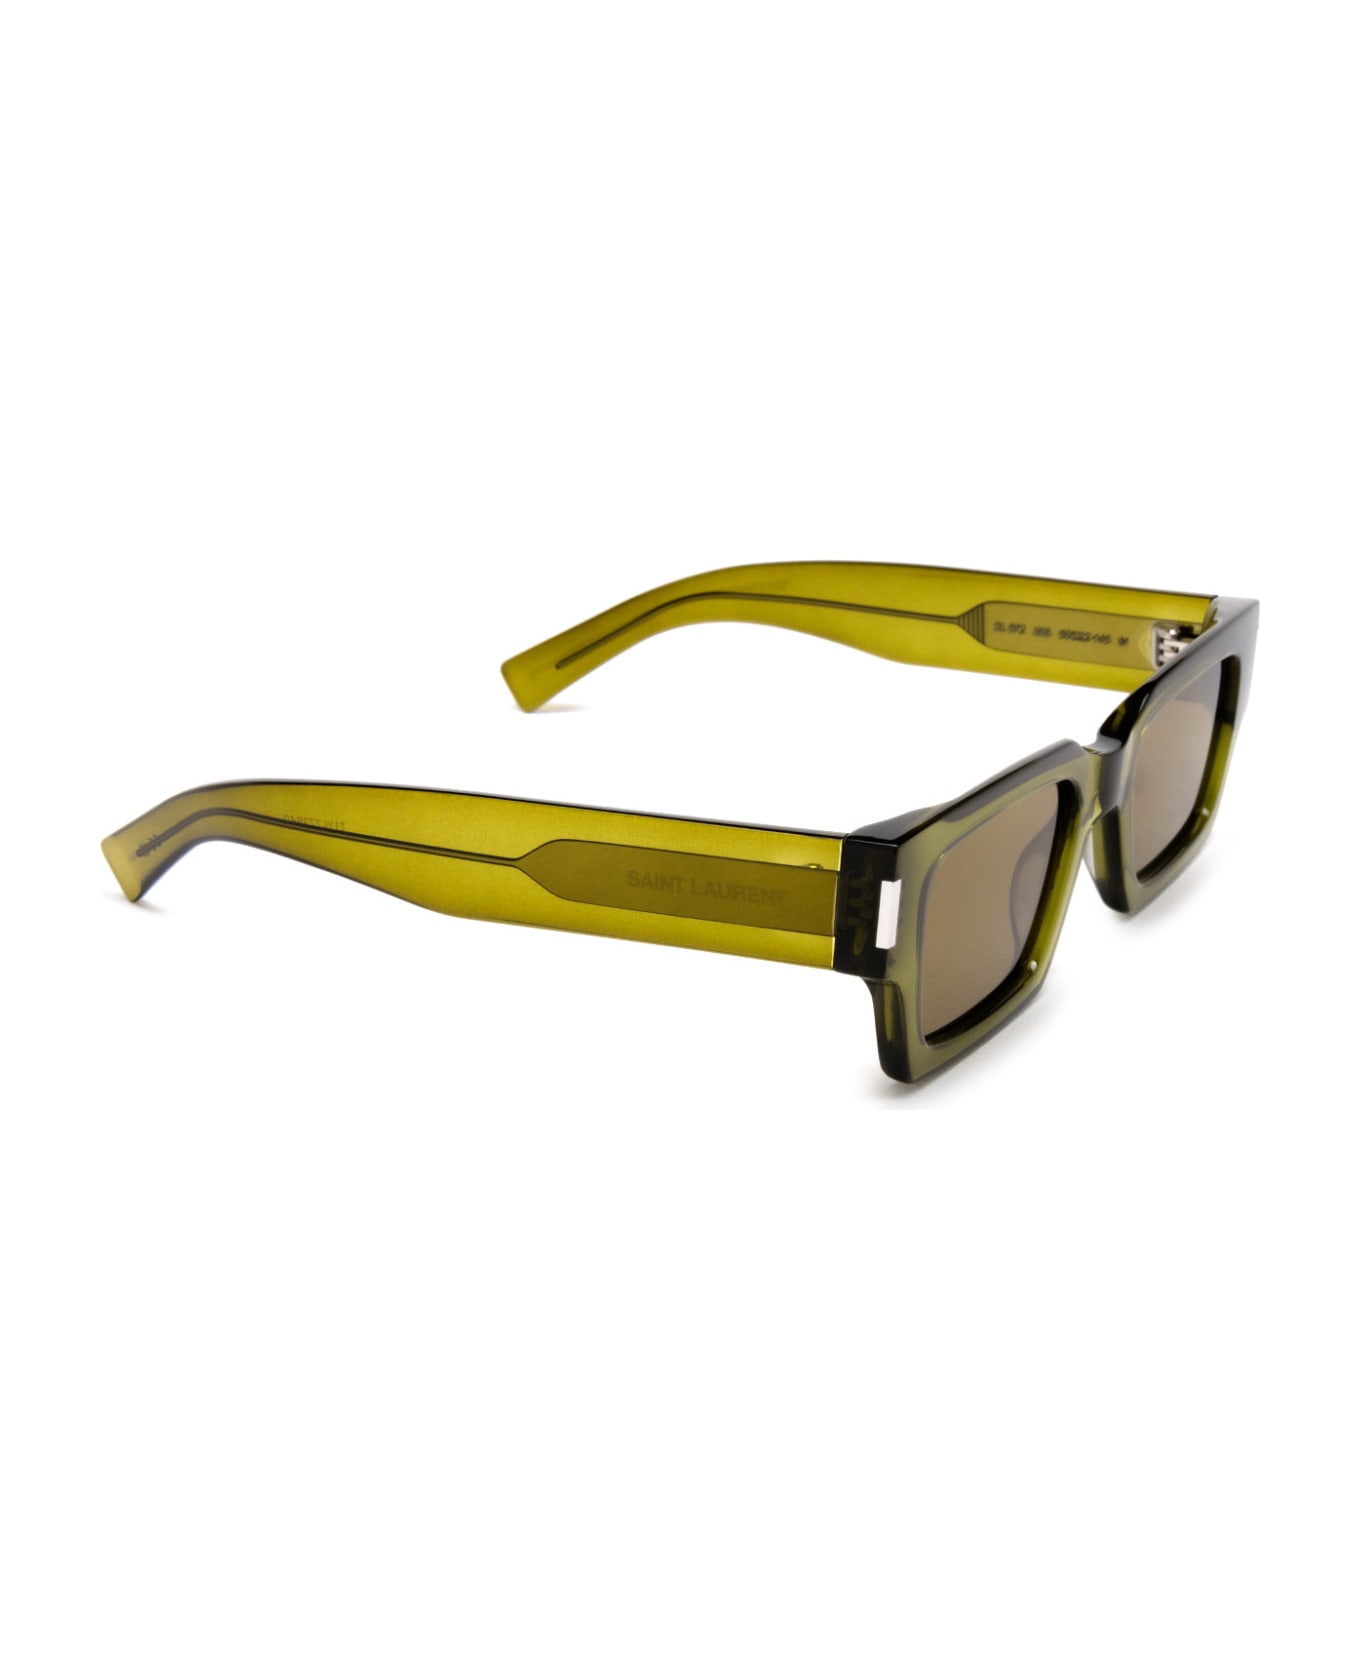 Saint Laurent Eyewear Sl 572 Green Sunglasses - Green